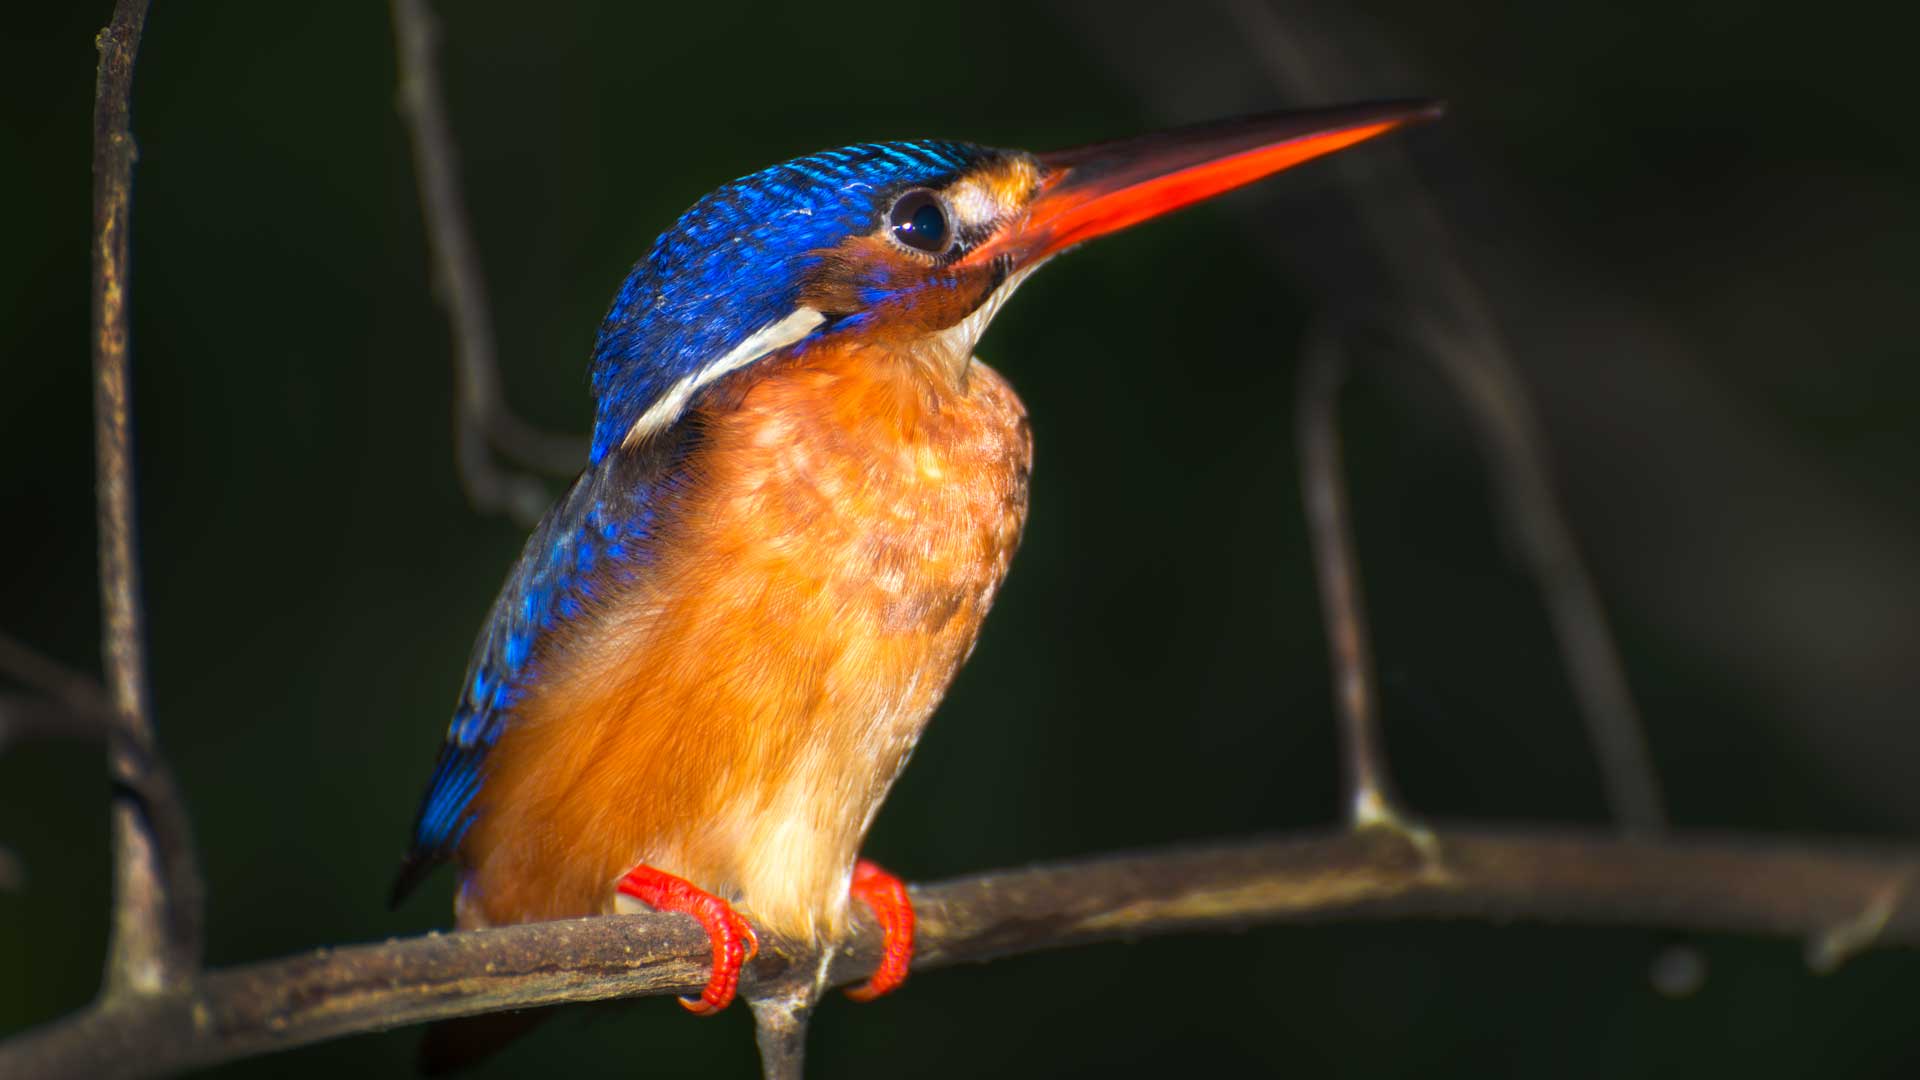 Blue-eared kingfisher